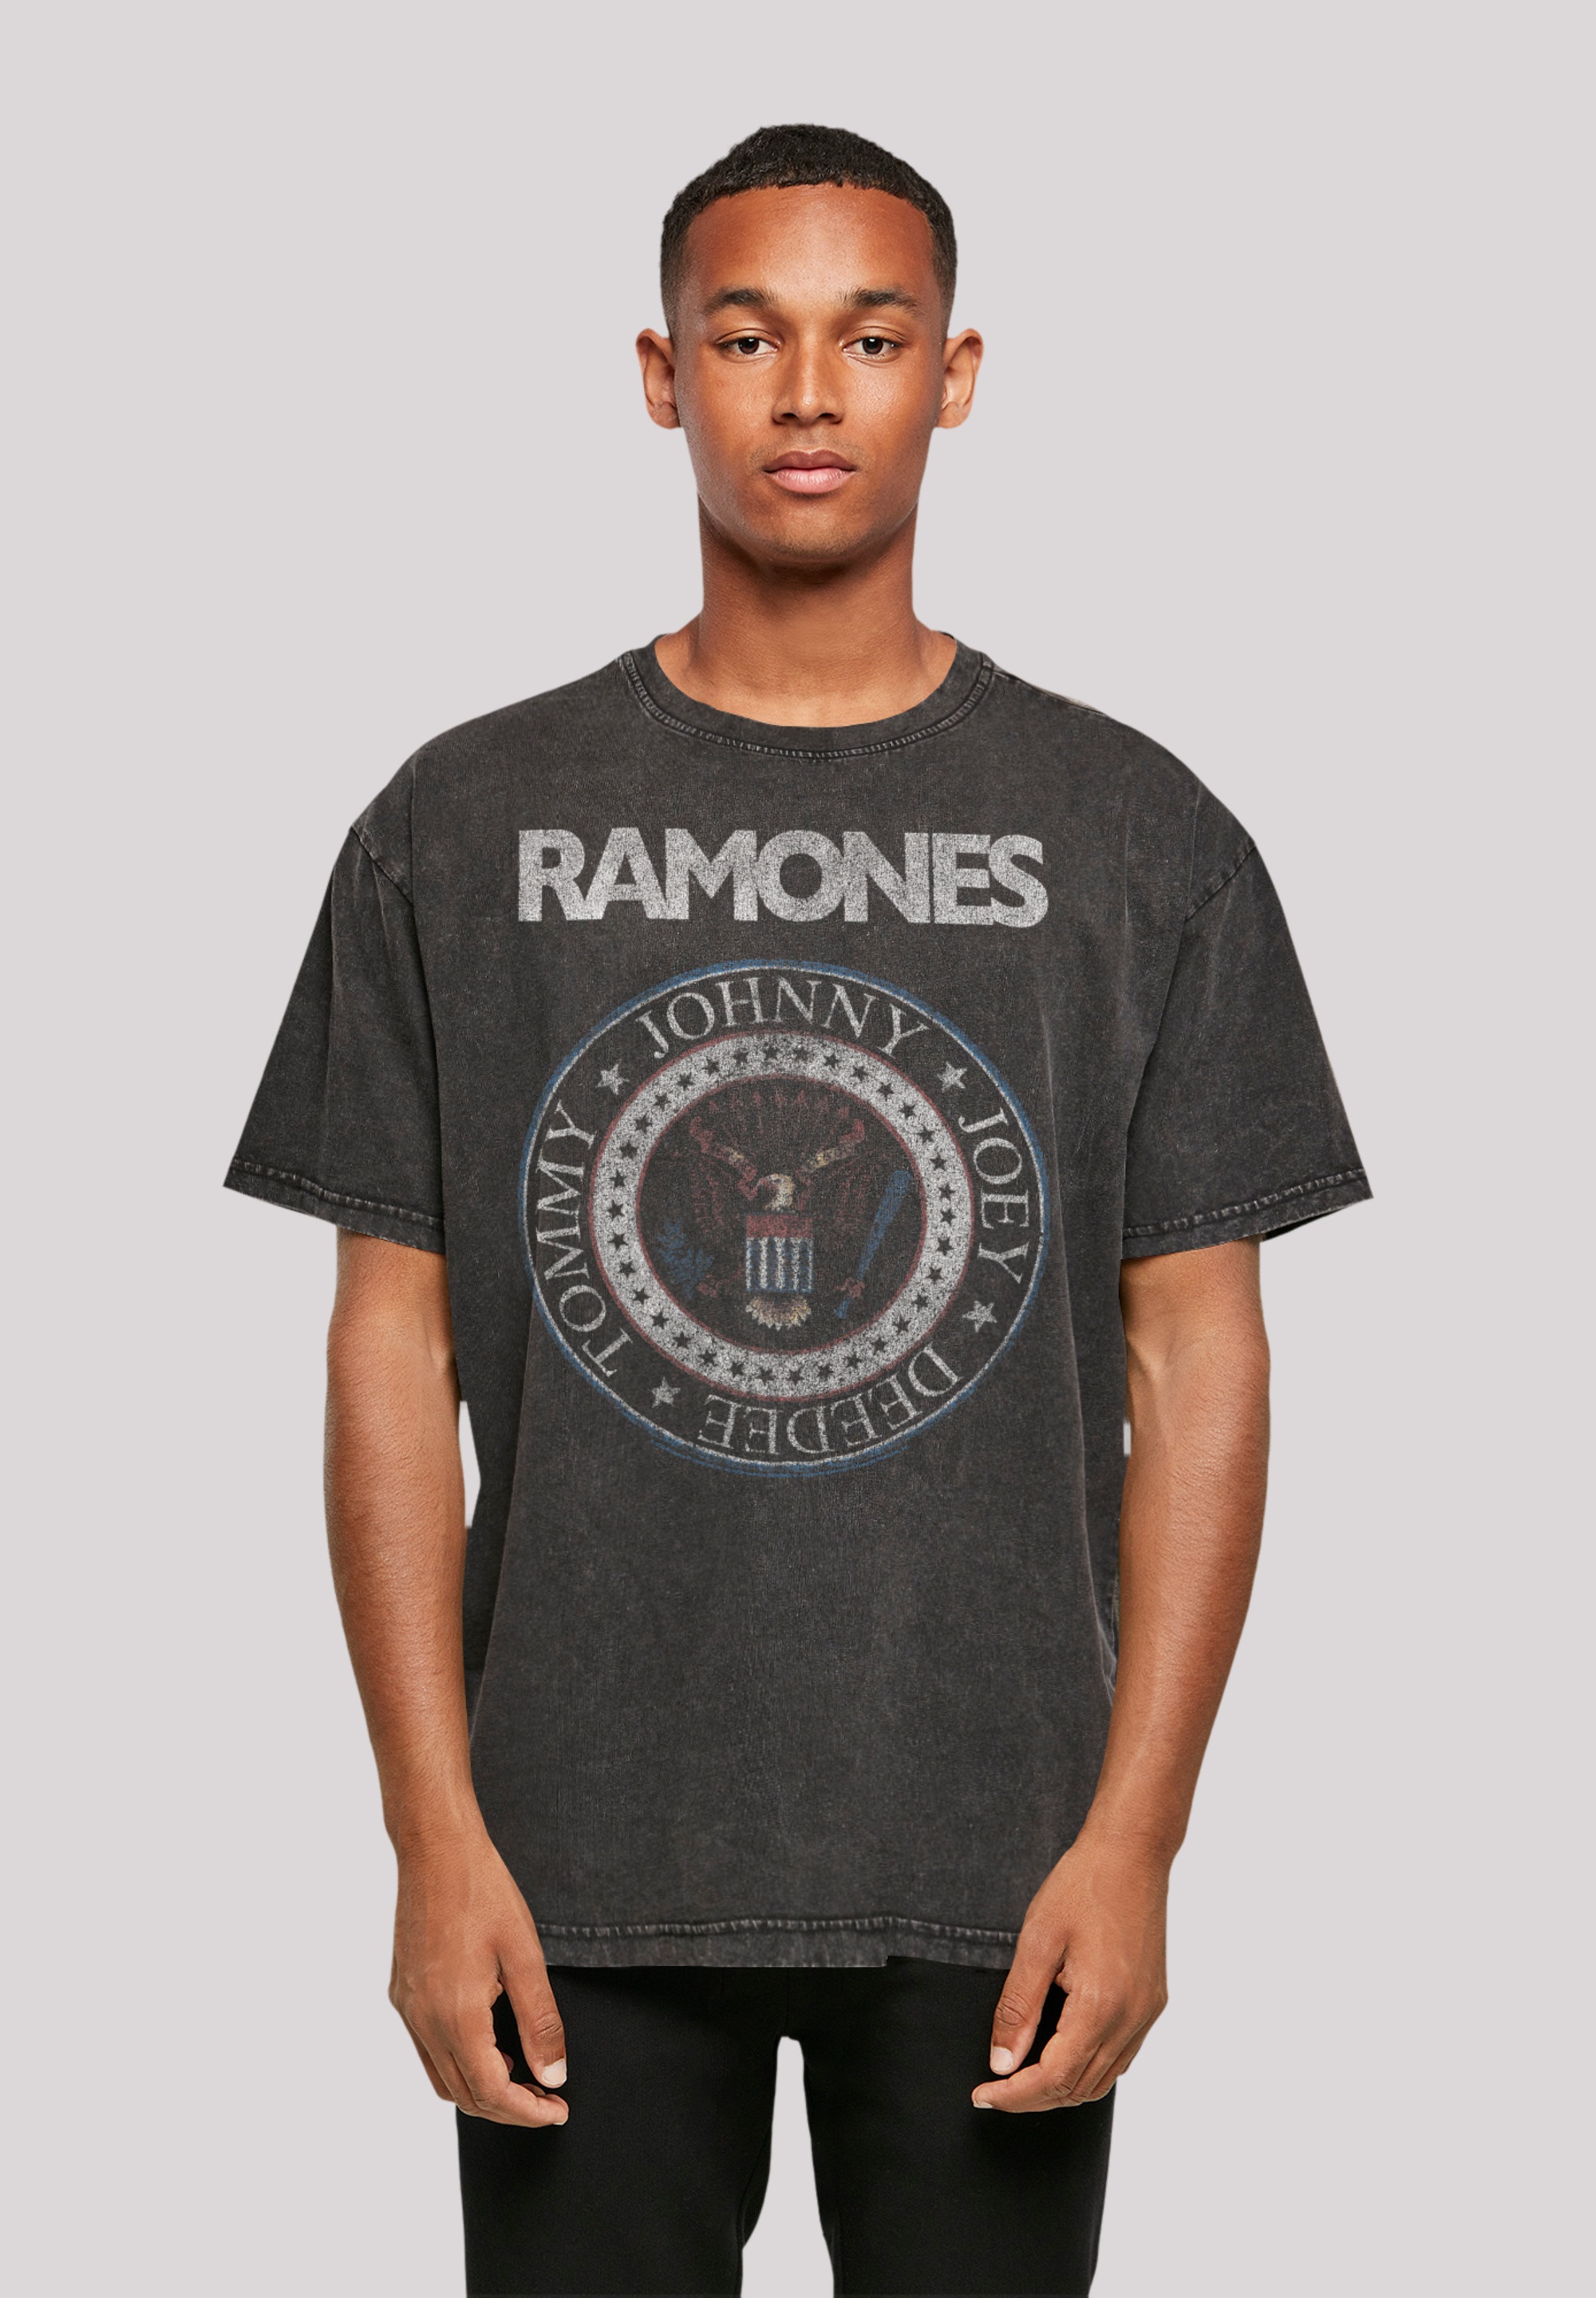 BAUR bestellen Seal«, Band White | Musik »Ramones Rock Qualität, Red Band, T-Shirt And Premium Rock-Musik ▷ F4NT4STIC